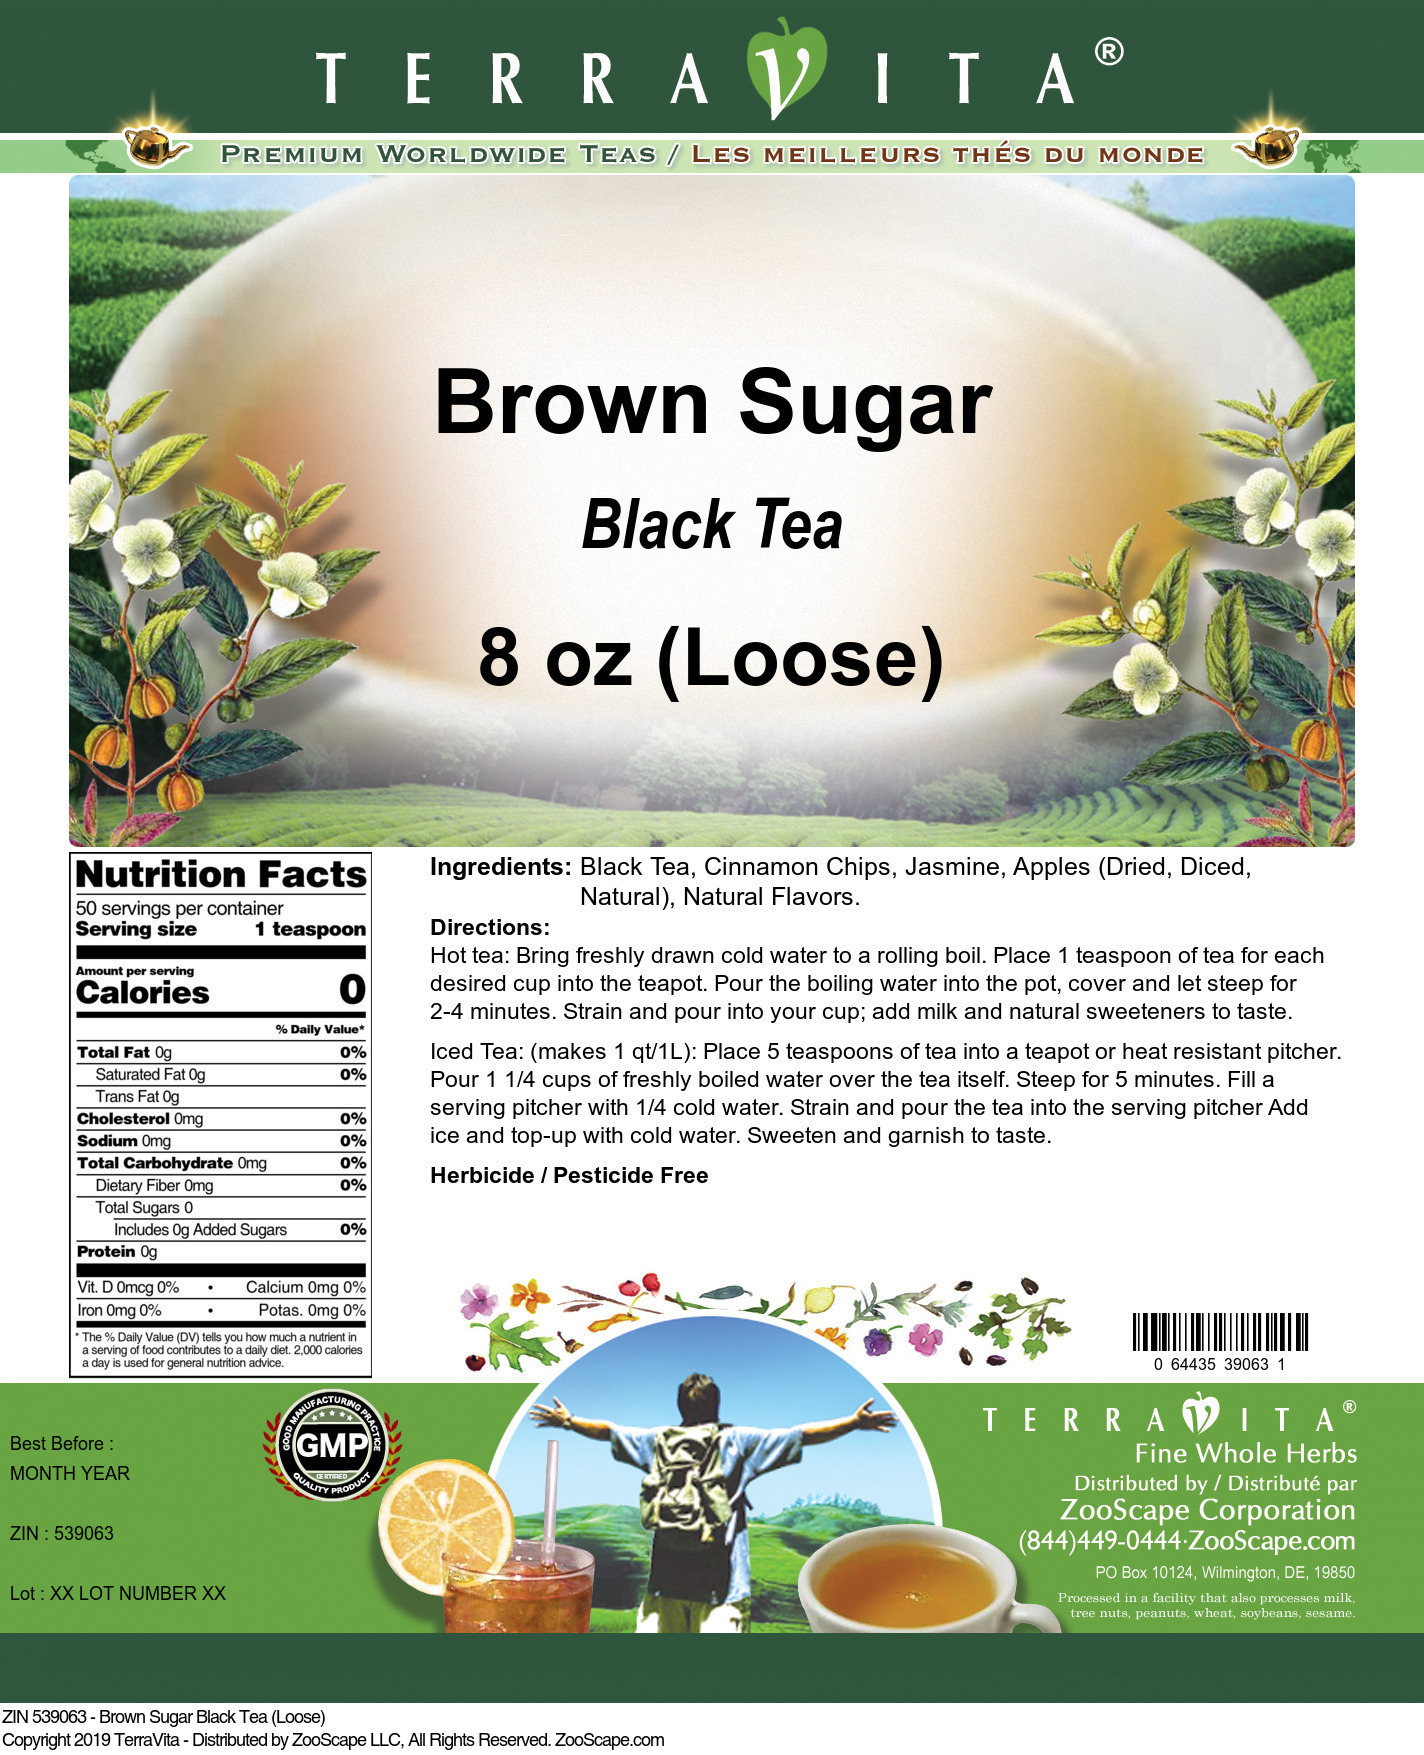 Brown Sugar Black Tea (Loose) - Label